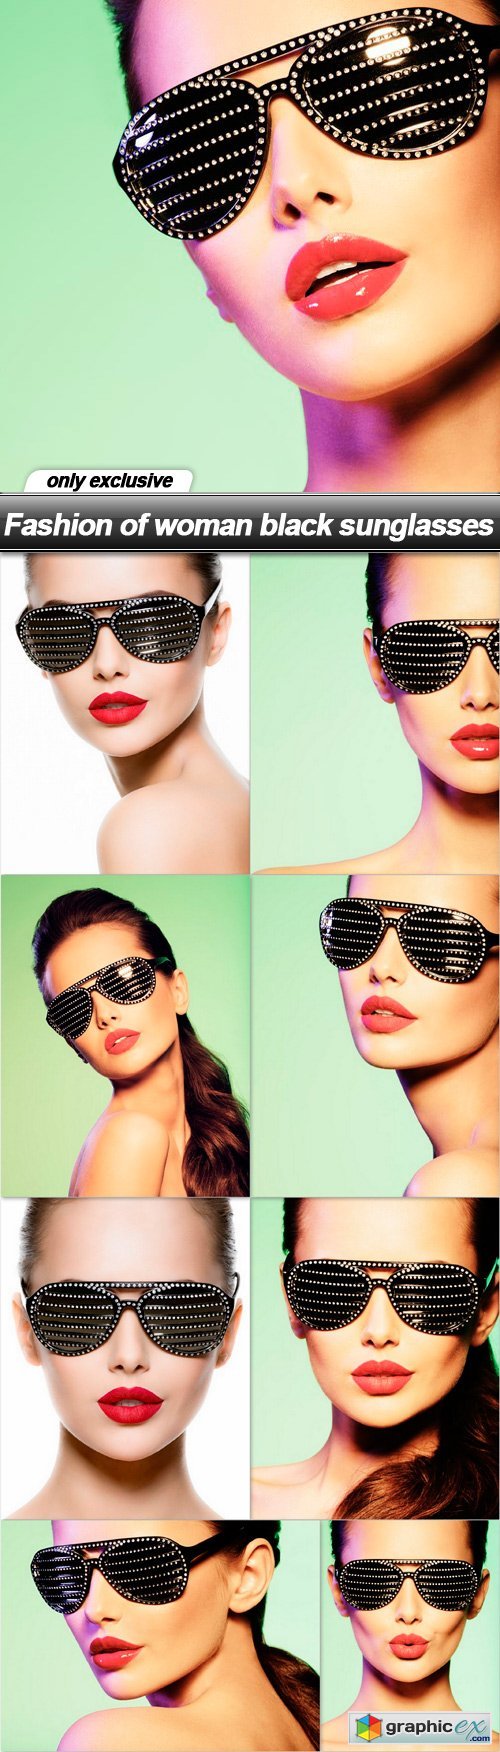 Fashion of woman black sunglasses - 9 UHQ JPEG